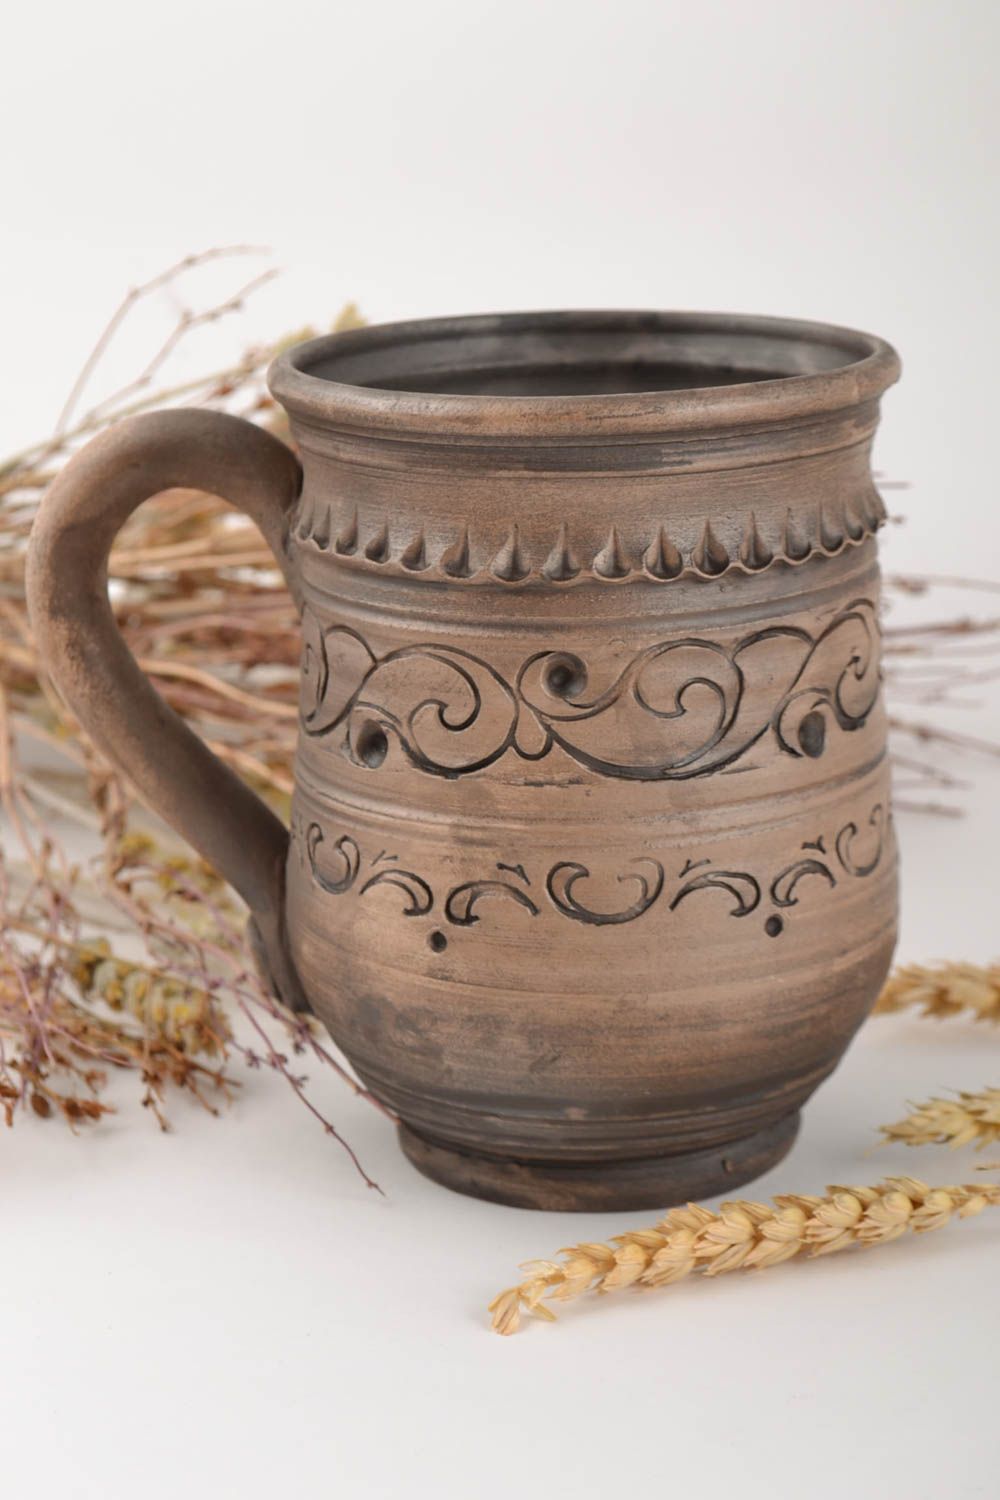 Extra-large 16 oz clay Italian-style coffee mug with handle photo 1